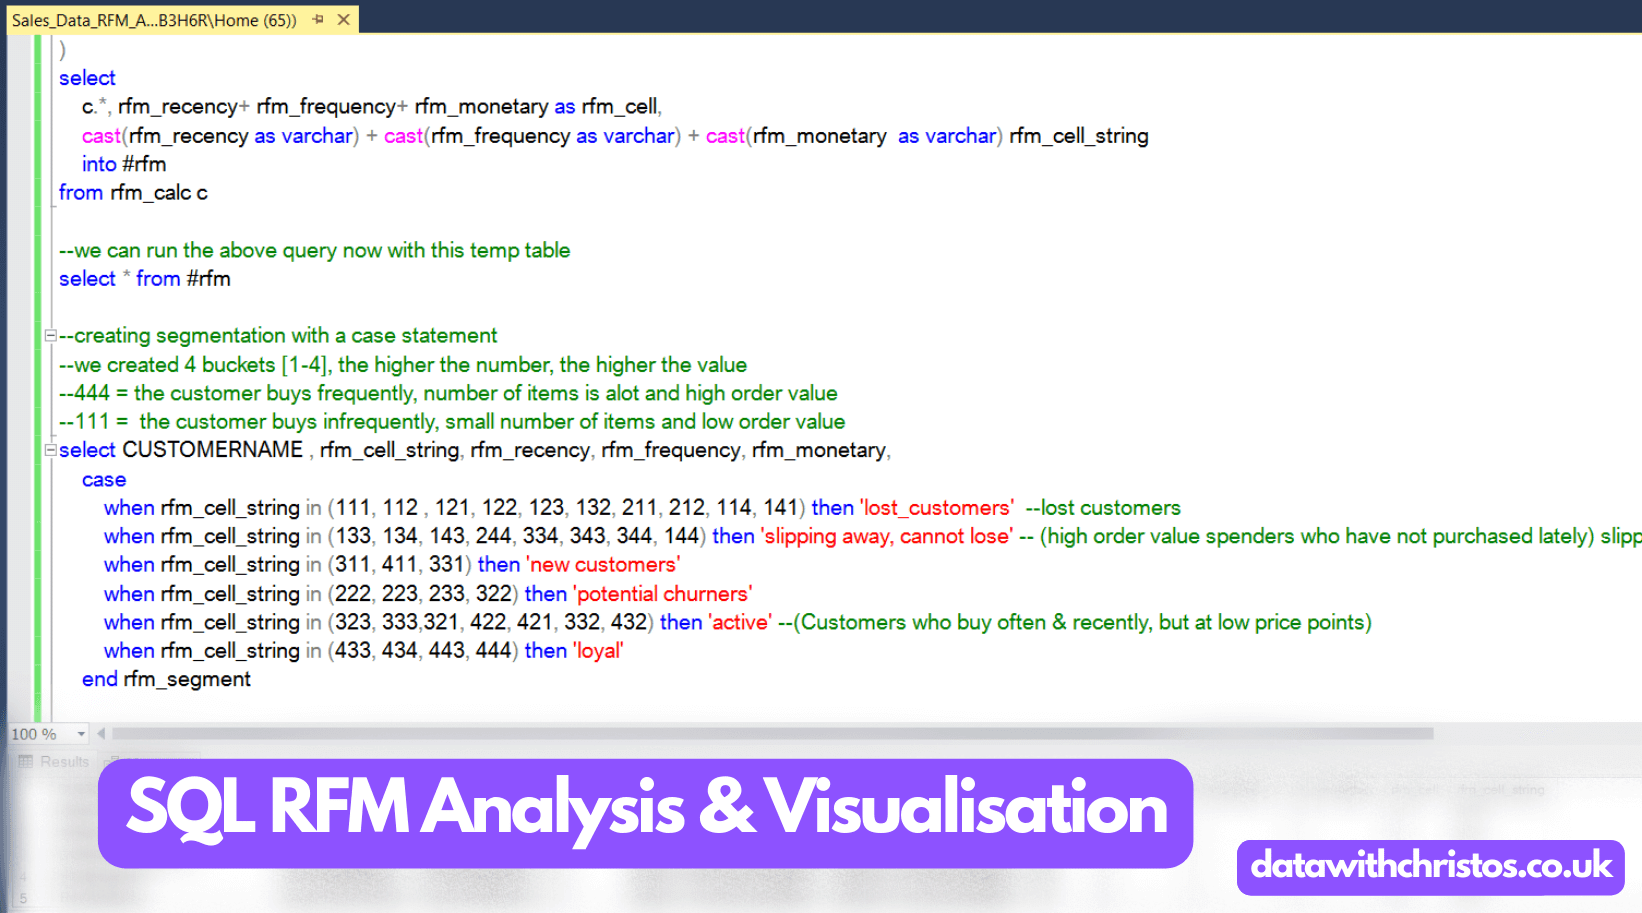 Sales Data RFM Analysis & Visualisation